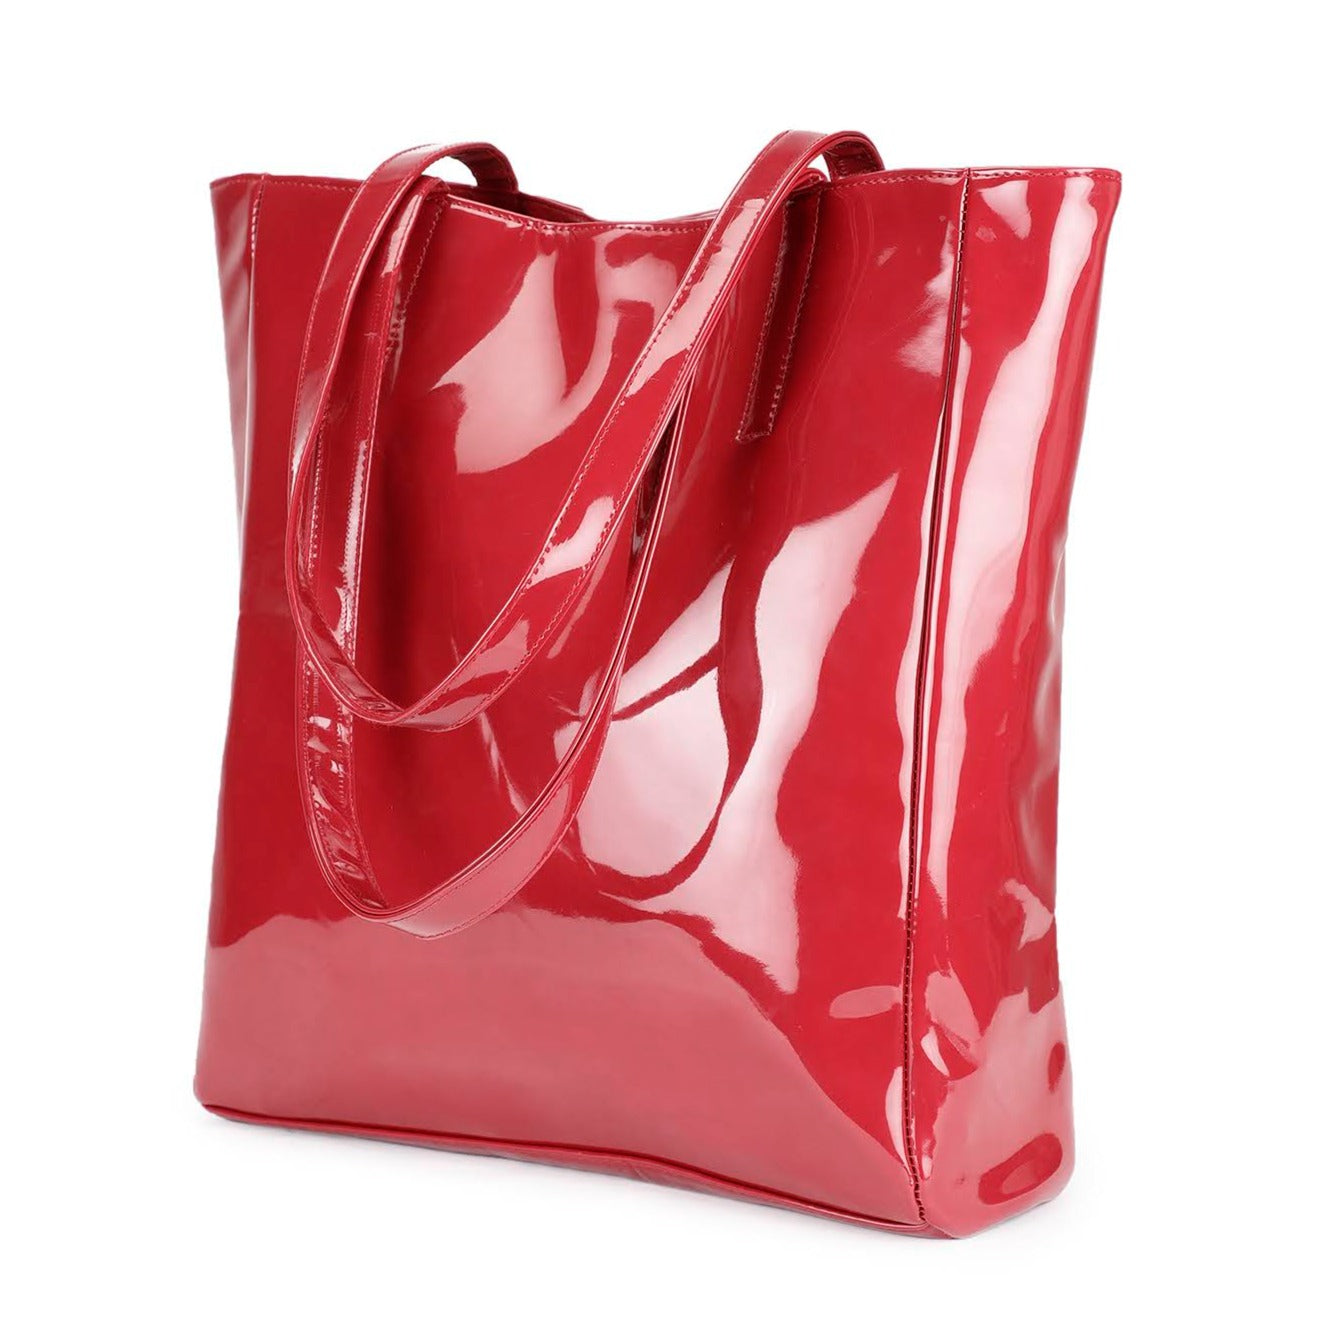 Oversized tote bag in size TU | Claudie Pierlot